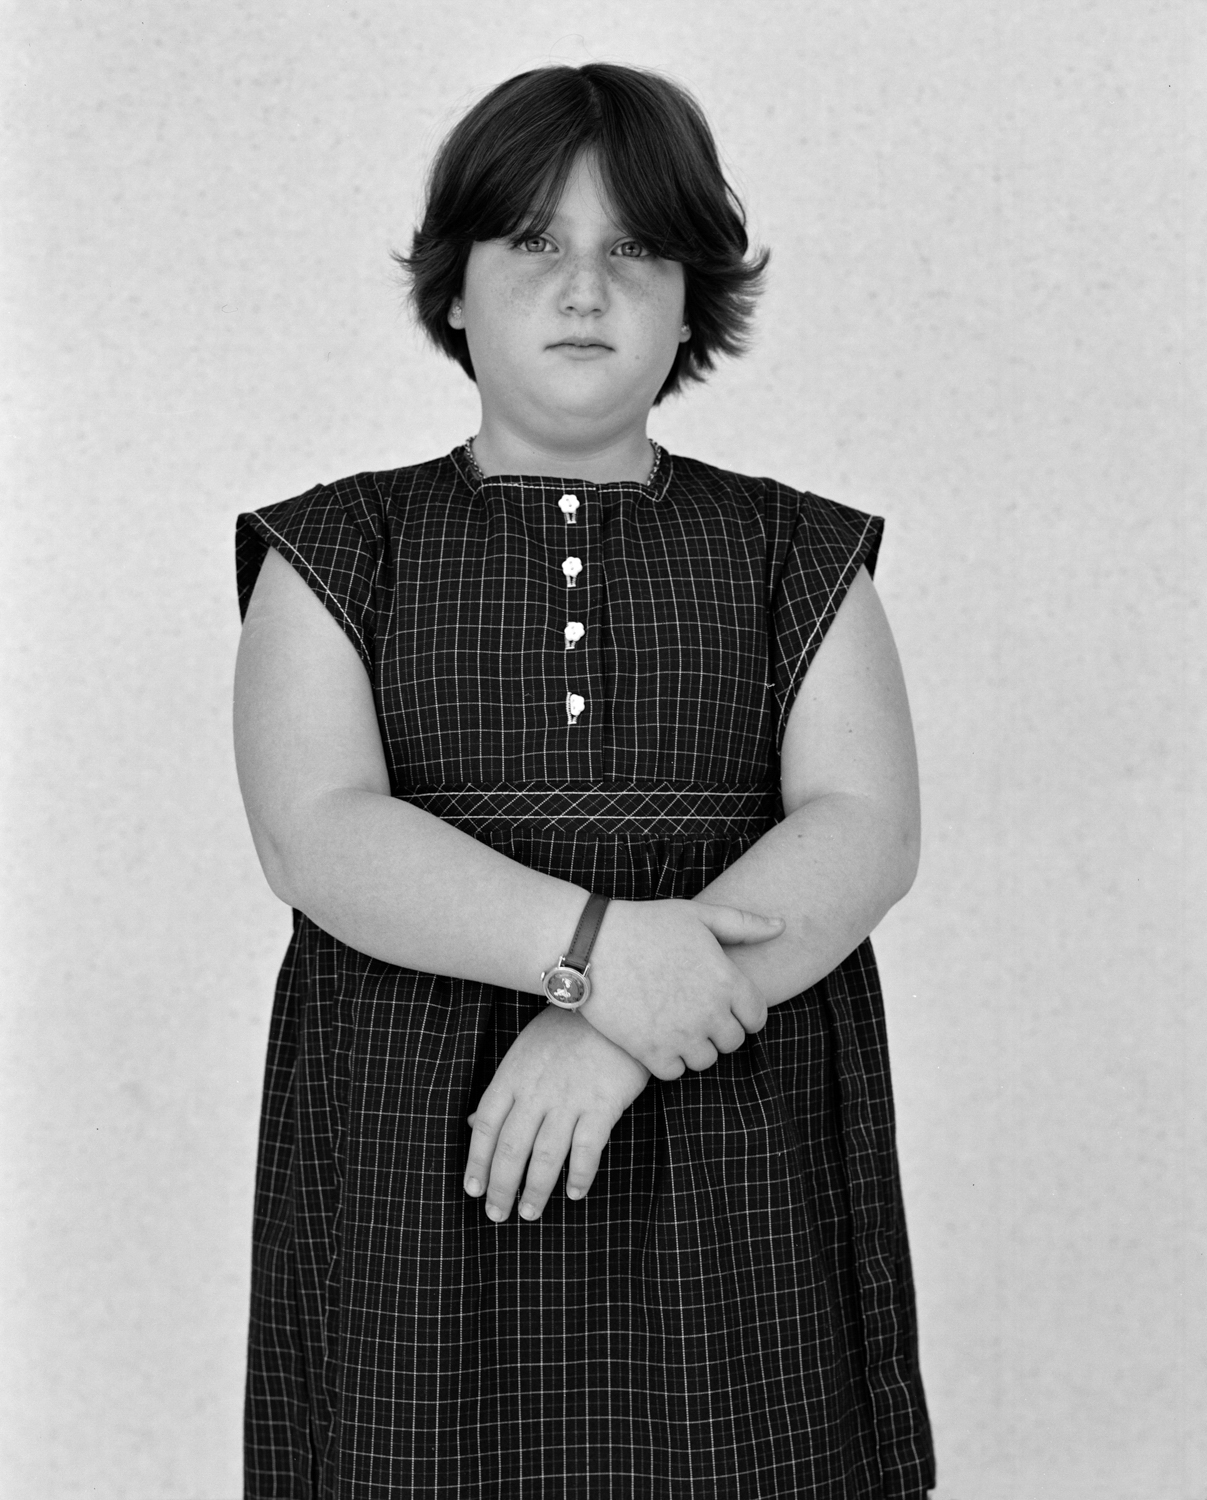 Girl at Temple Beth Israel, Houston, TX, 1975